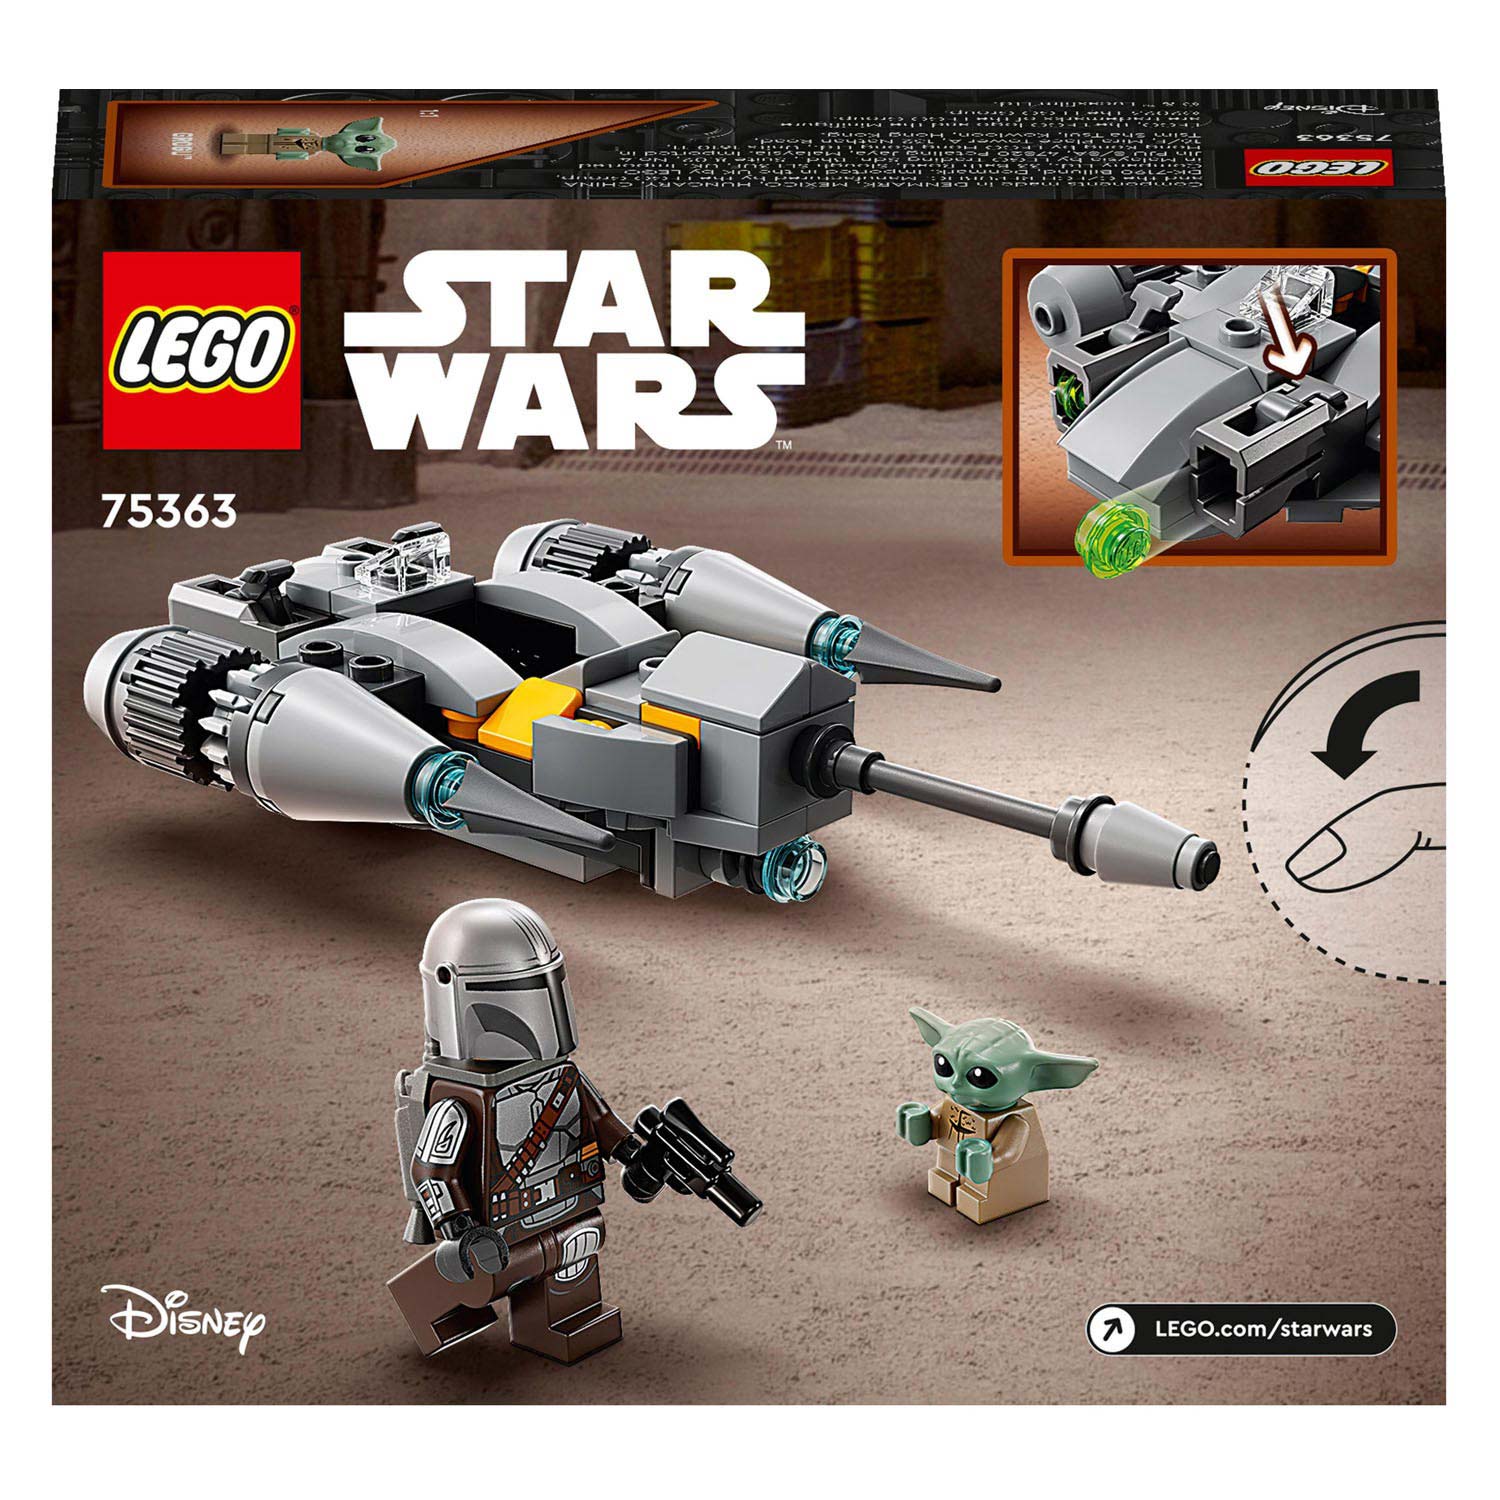 LEGO Star Wars 5363 De Mandalorian N-1 Starfighter Microfighter